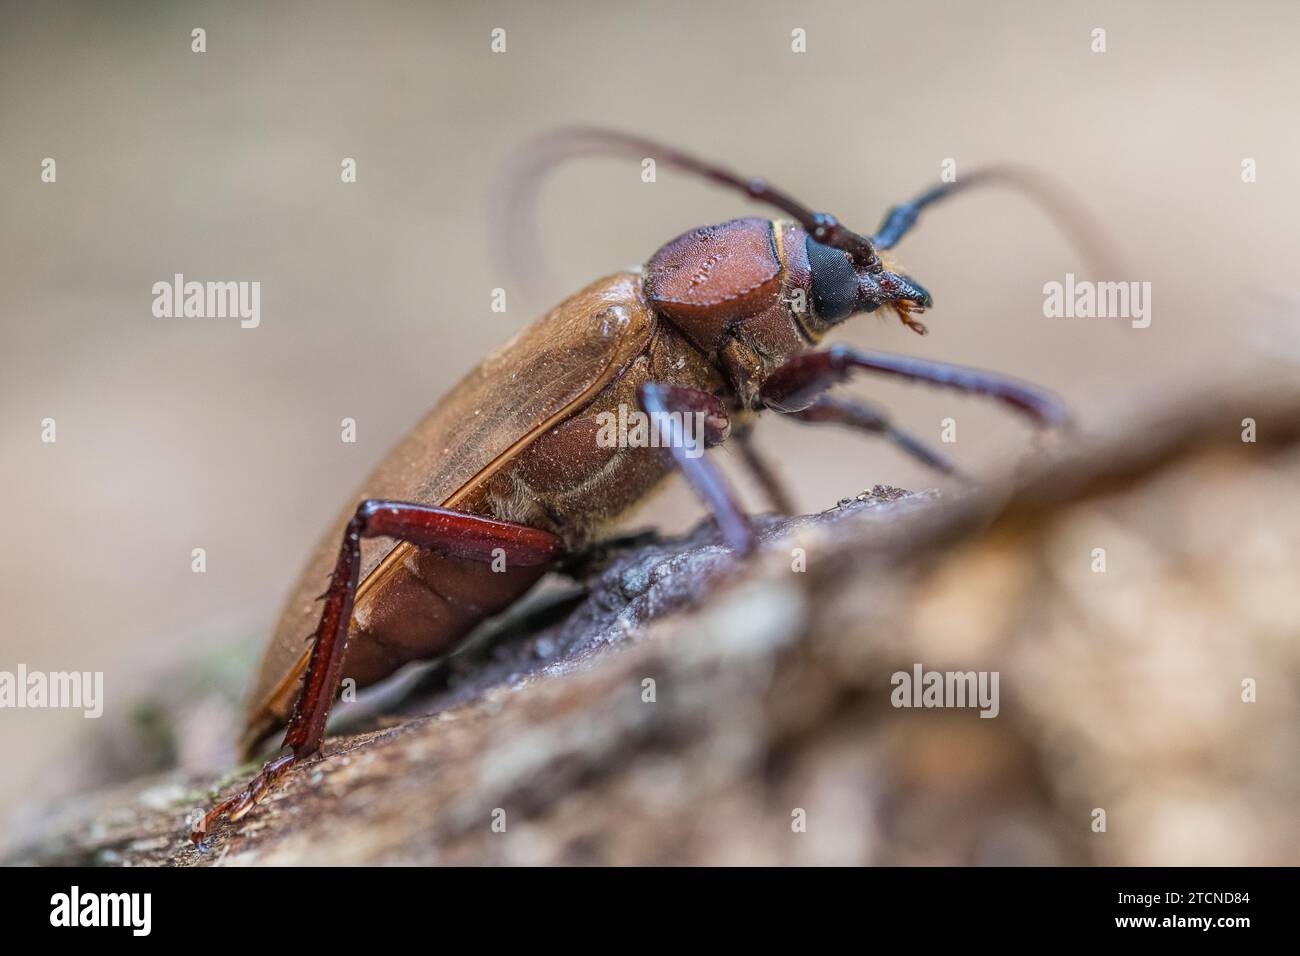 Agrianome spinicollis, the Australian Prionine Beetle Stock Photo